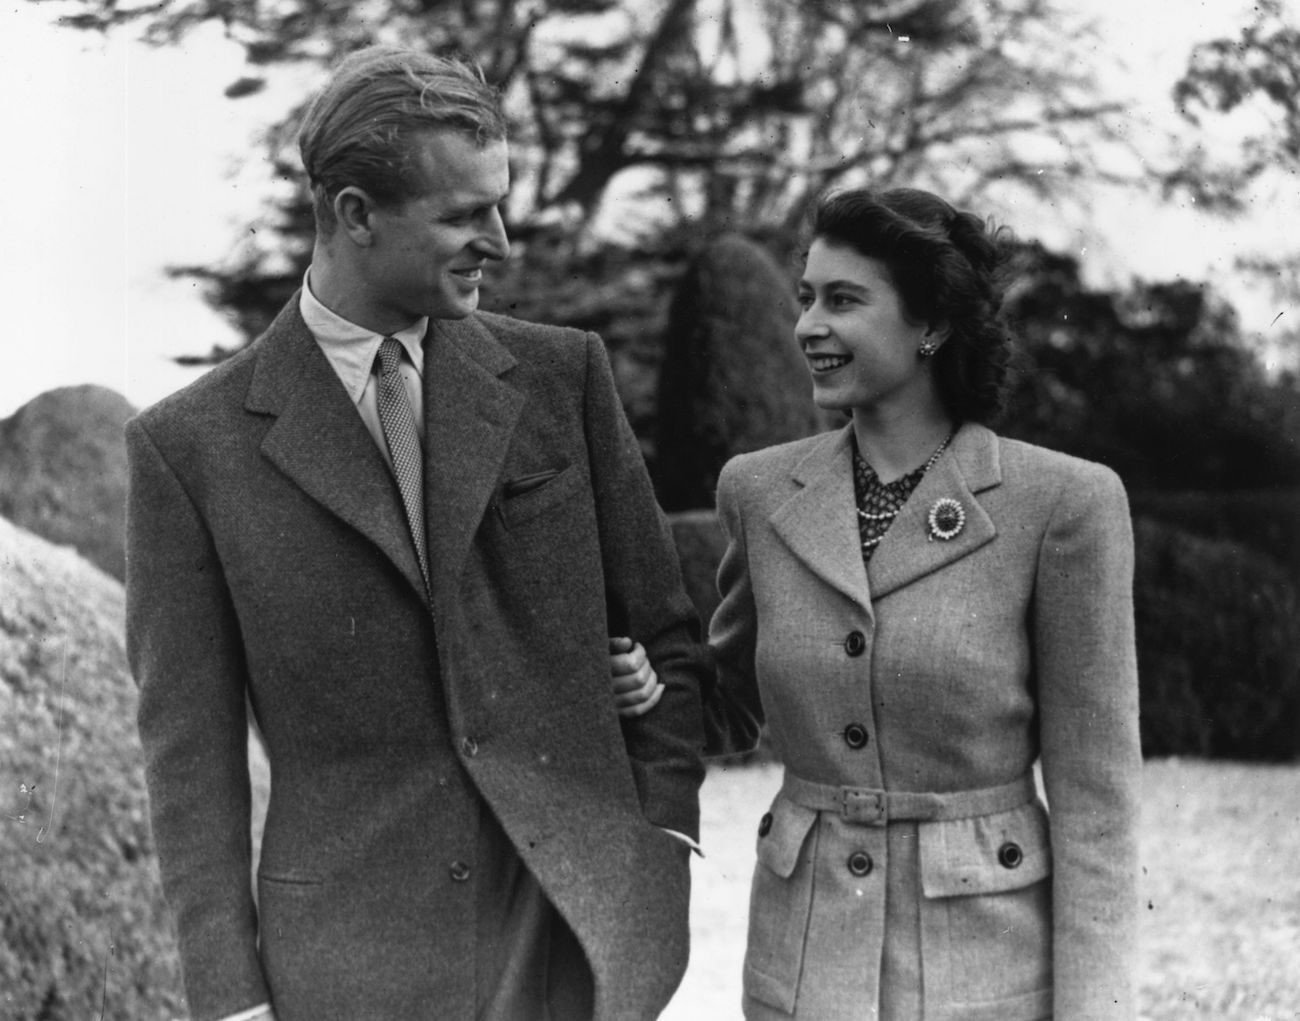 Prince Philip and Queen Elizabeth II during their honeymoon at Broadlands, Romsey, Hampshire in 1947.